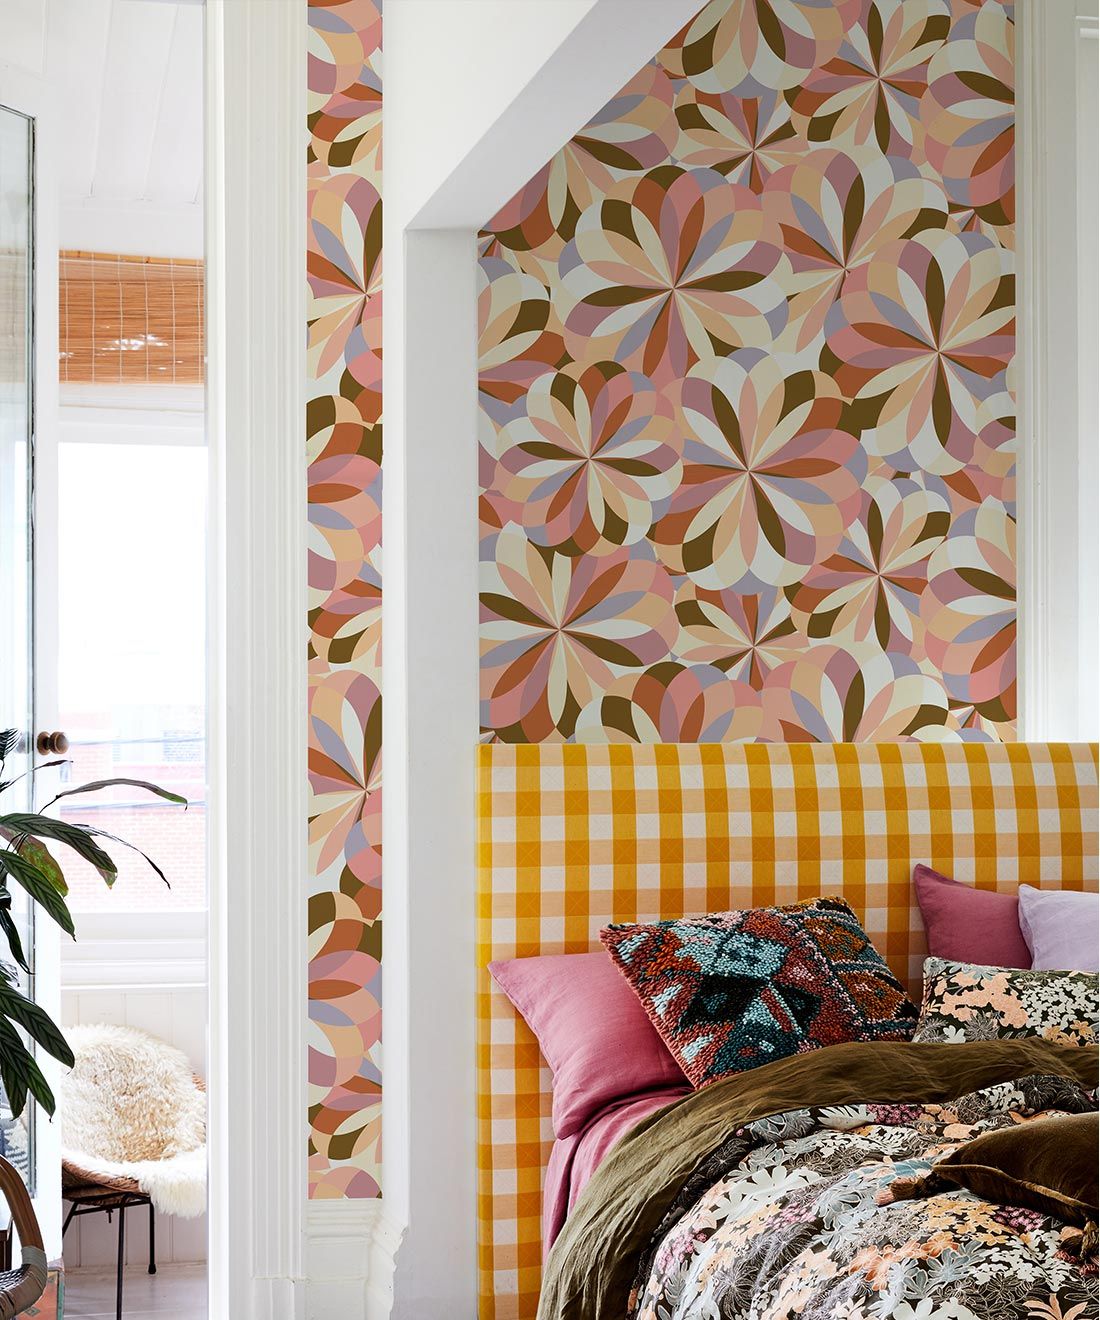 Uncommonly Splendid Wallpaper • Retro Kaleidoscope Wallpaper • Autumn • Insitu with yellow plaid headboard